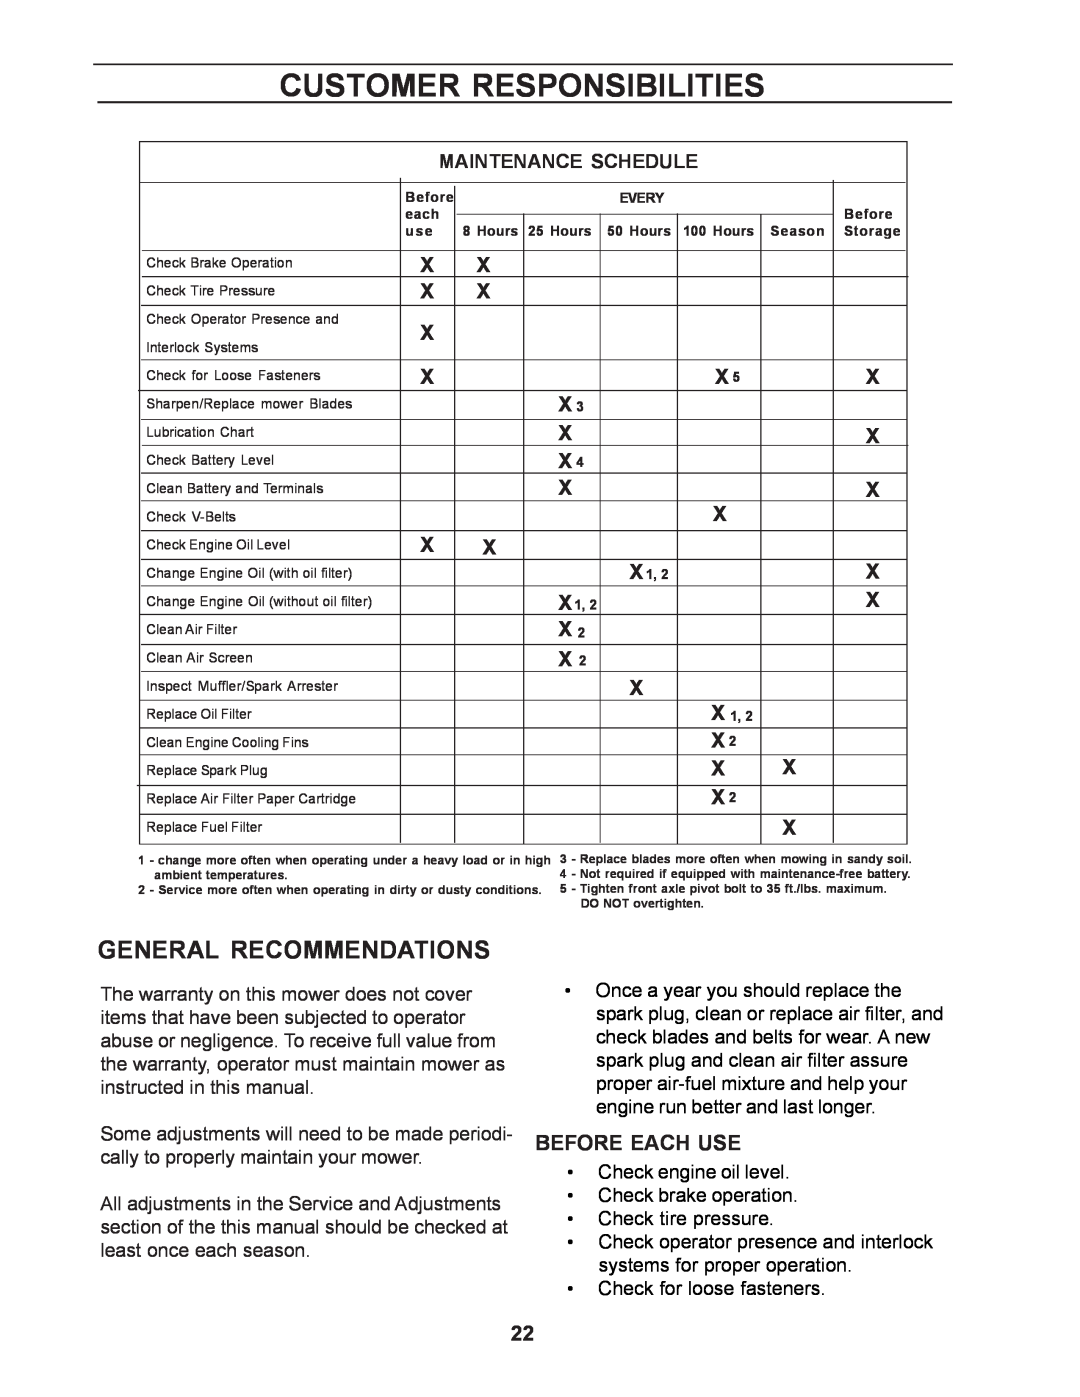 Yazoo/Kees ZCBI48181 manual General Recommendations, Before Each Use, Customer Responsibilities 